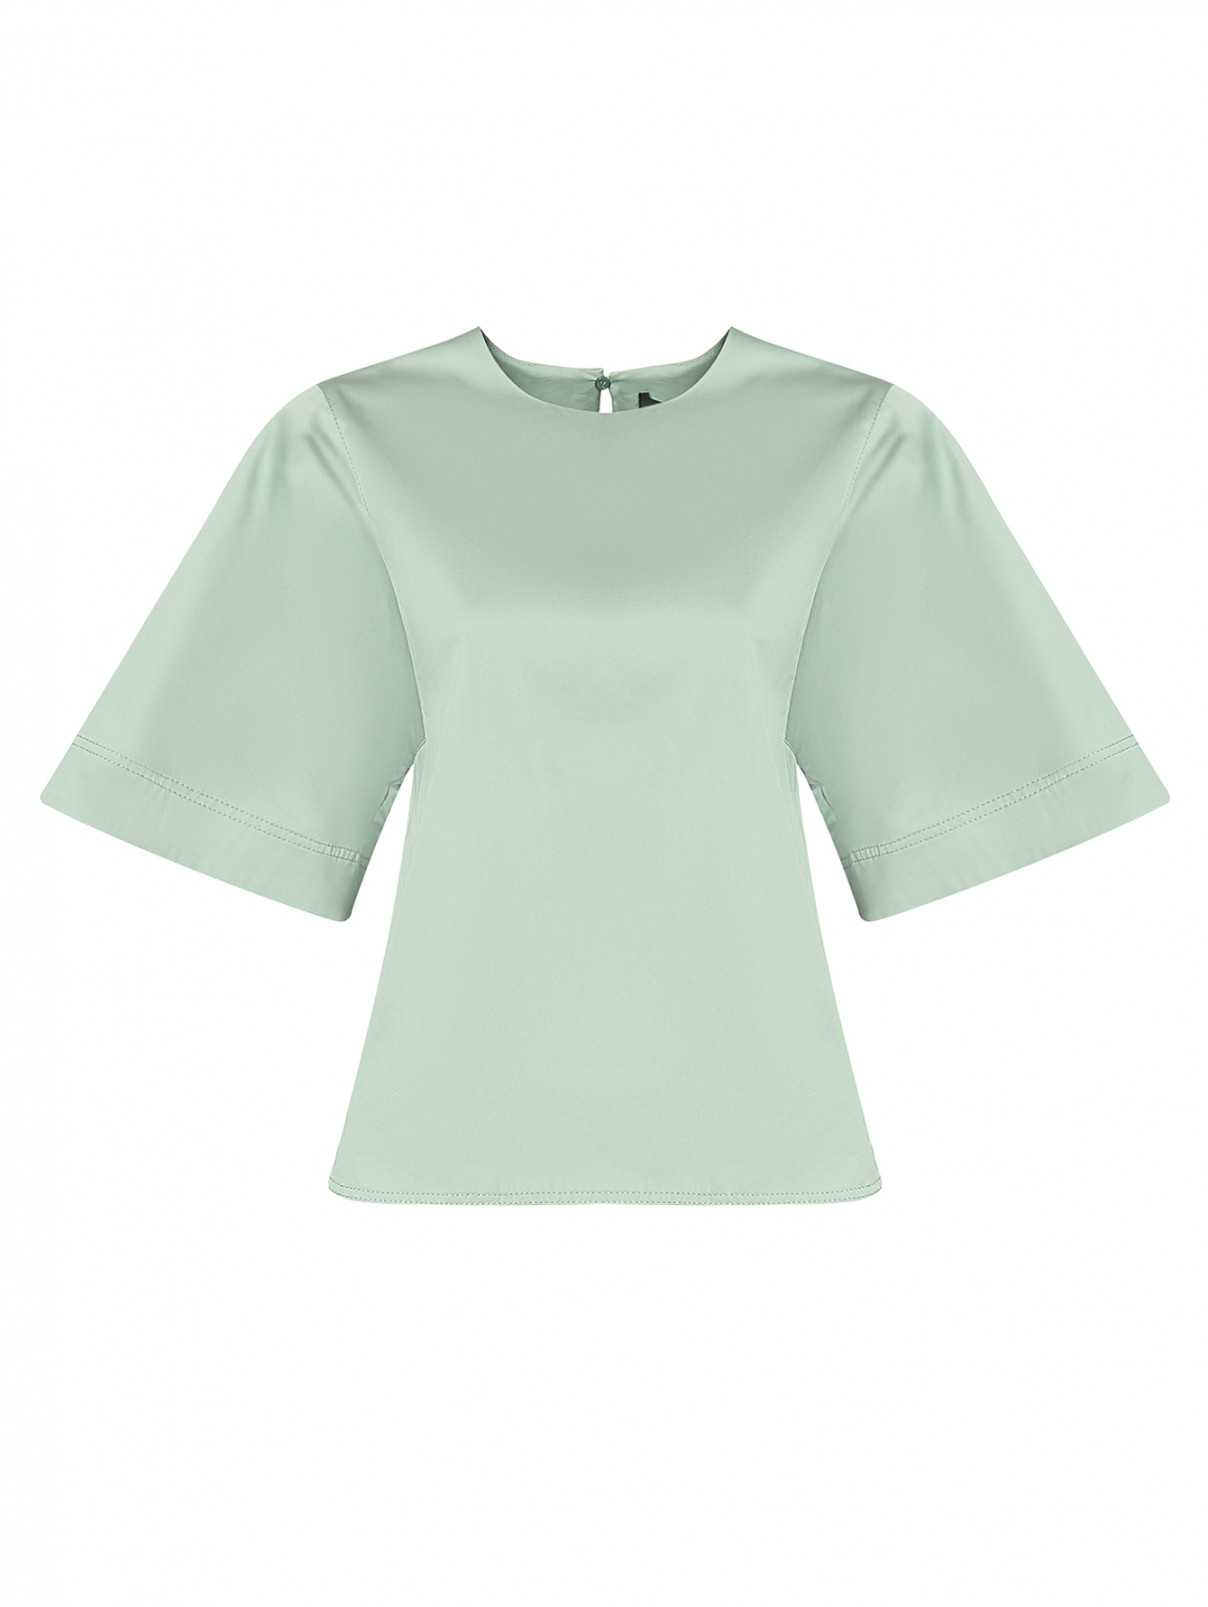 Блуза из хлопка с короткими рукавами Weekend Max Mara  –  Общий вид  – Цвет:  Синий